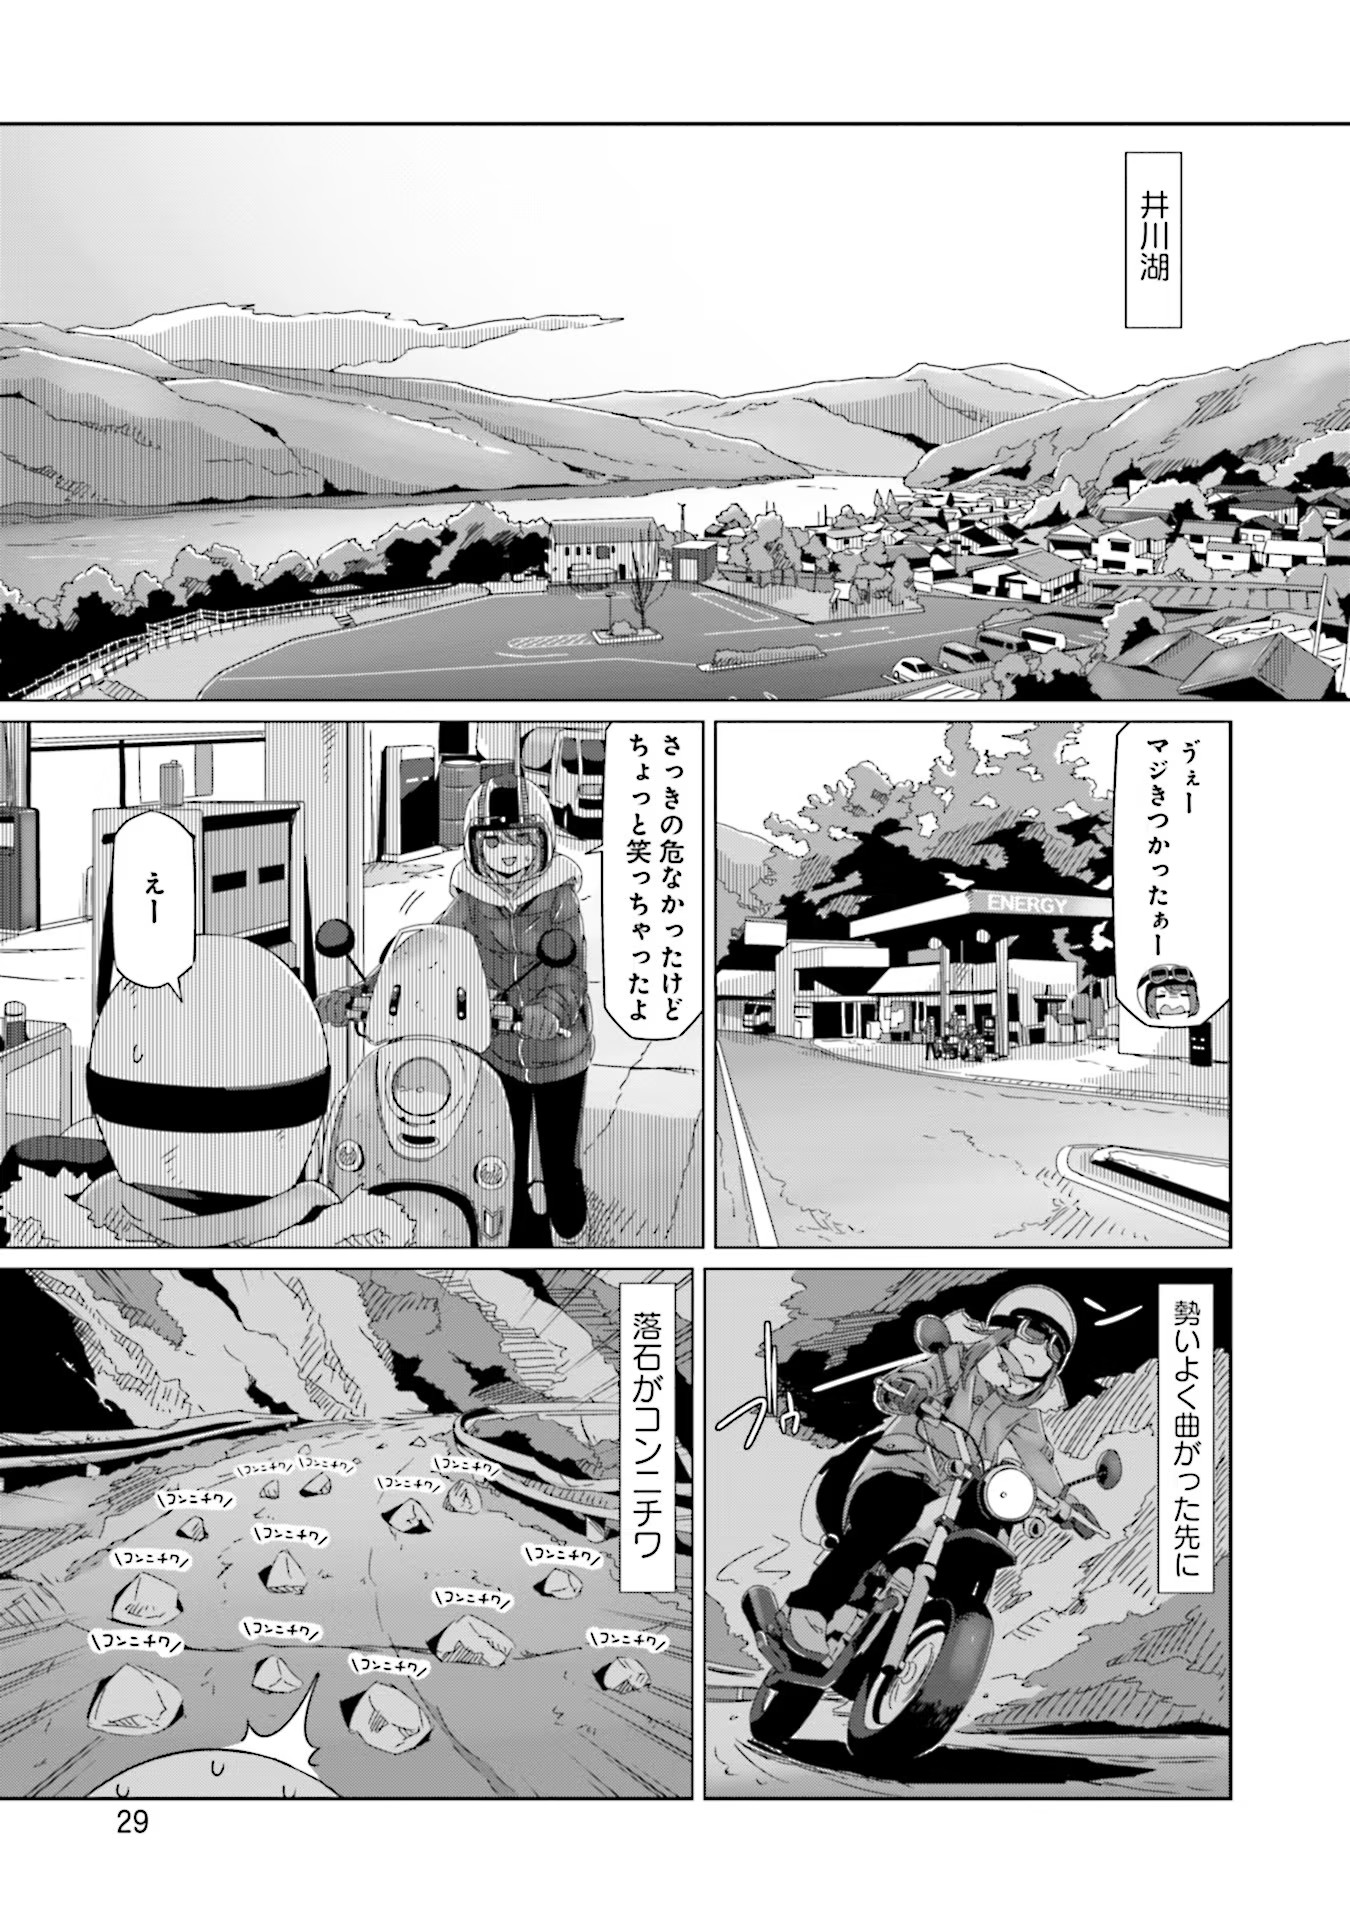 Yuru Camp - Chapter 59 - Page 1